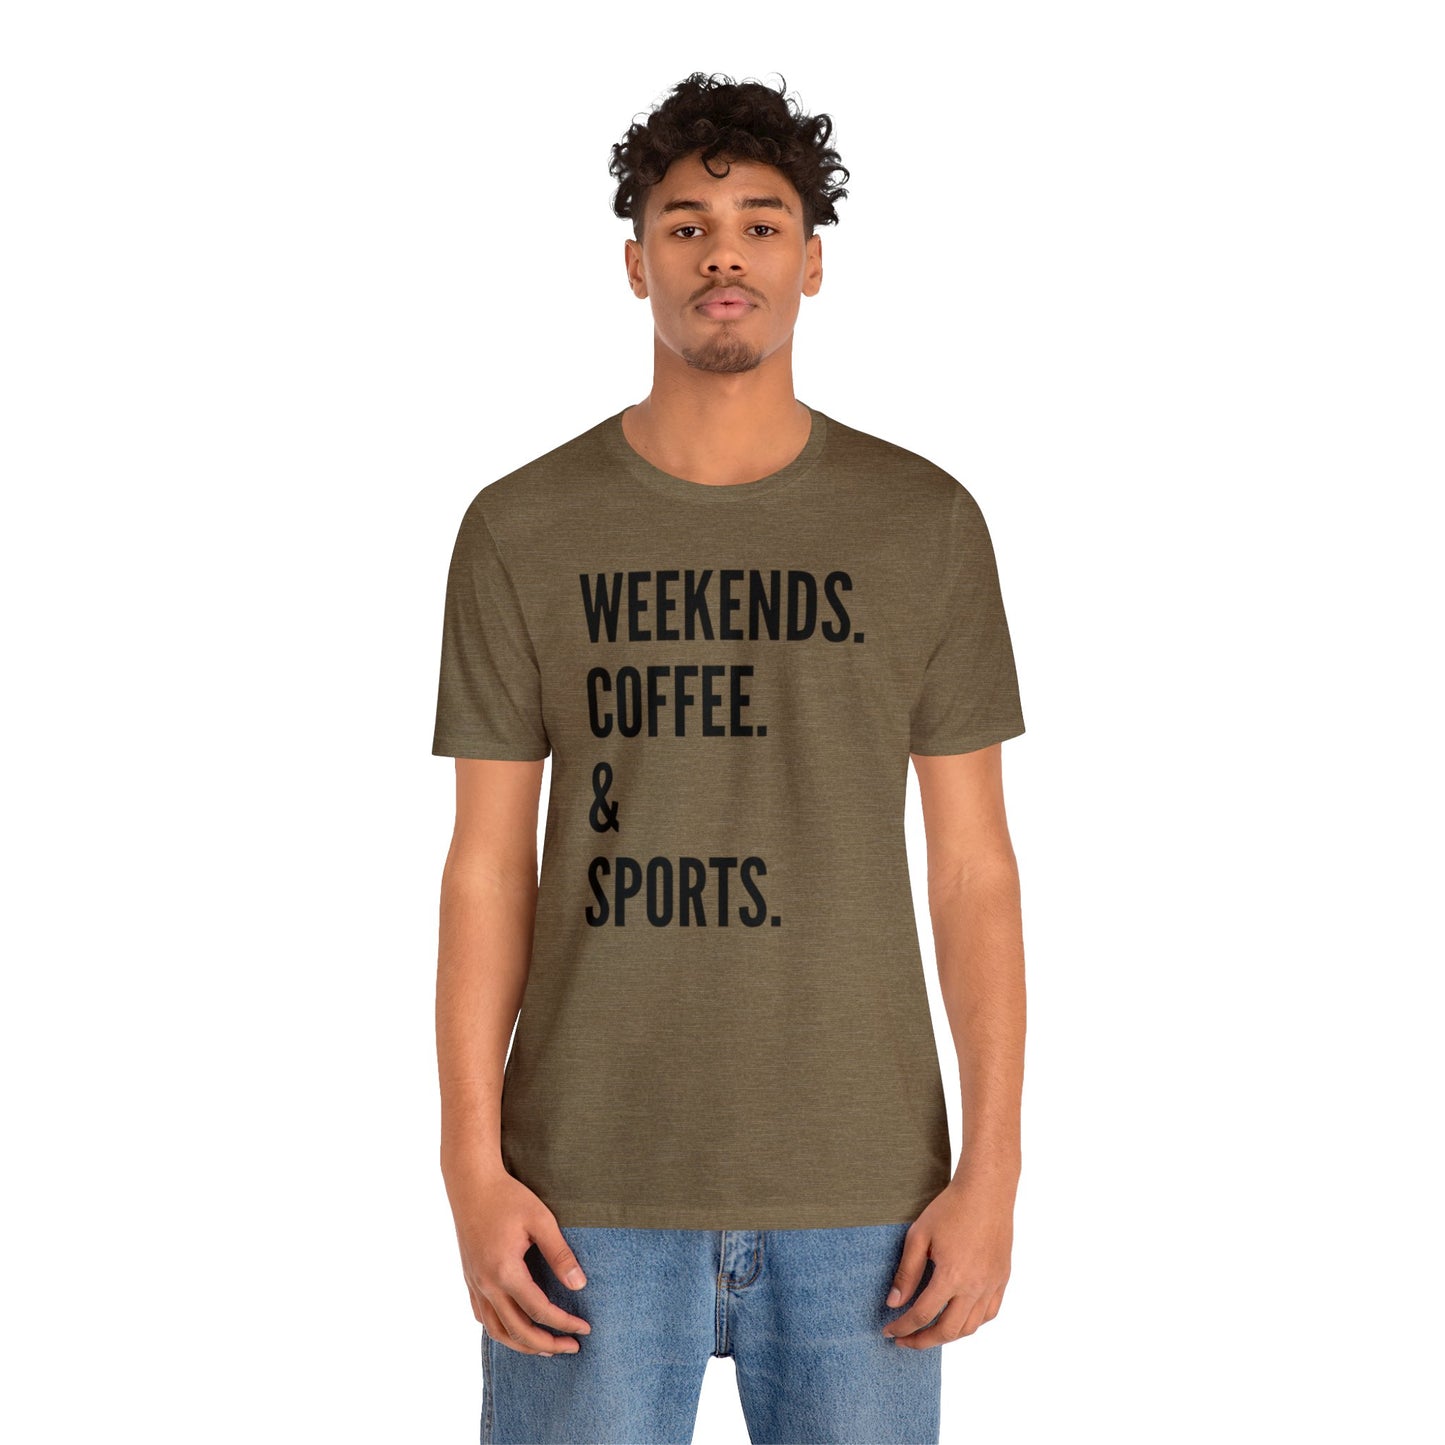 Weekends. Coffee. & Sports. W/Black writing - Unisex Jersey Short Sleeve Tee